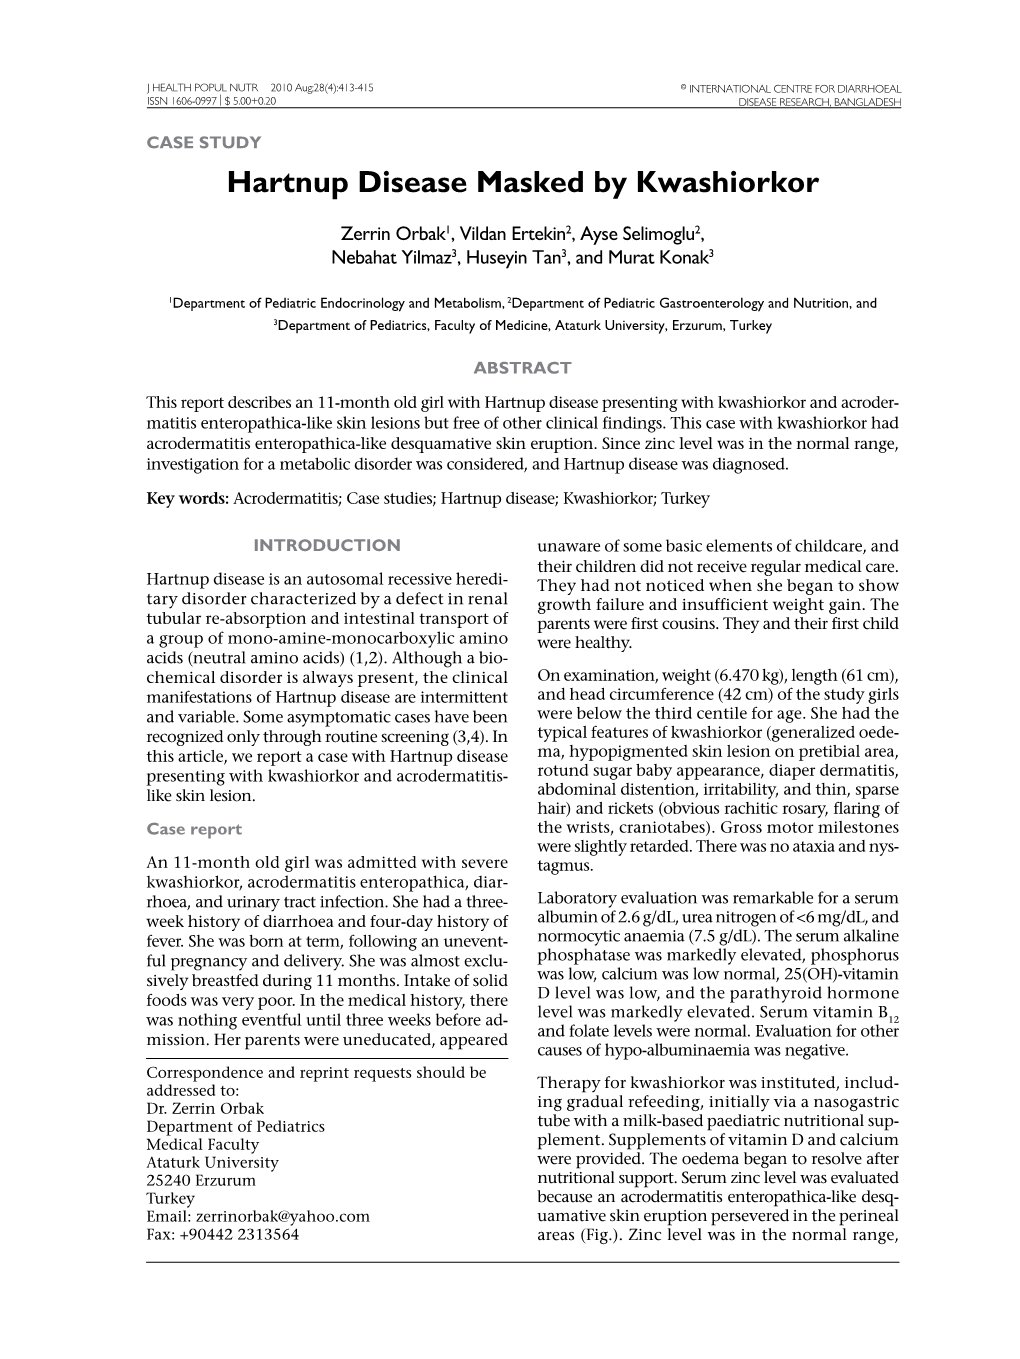 Hartnup Disease Masked by Kwashiorkor